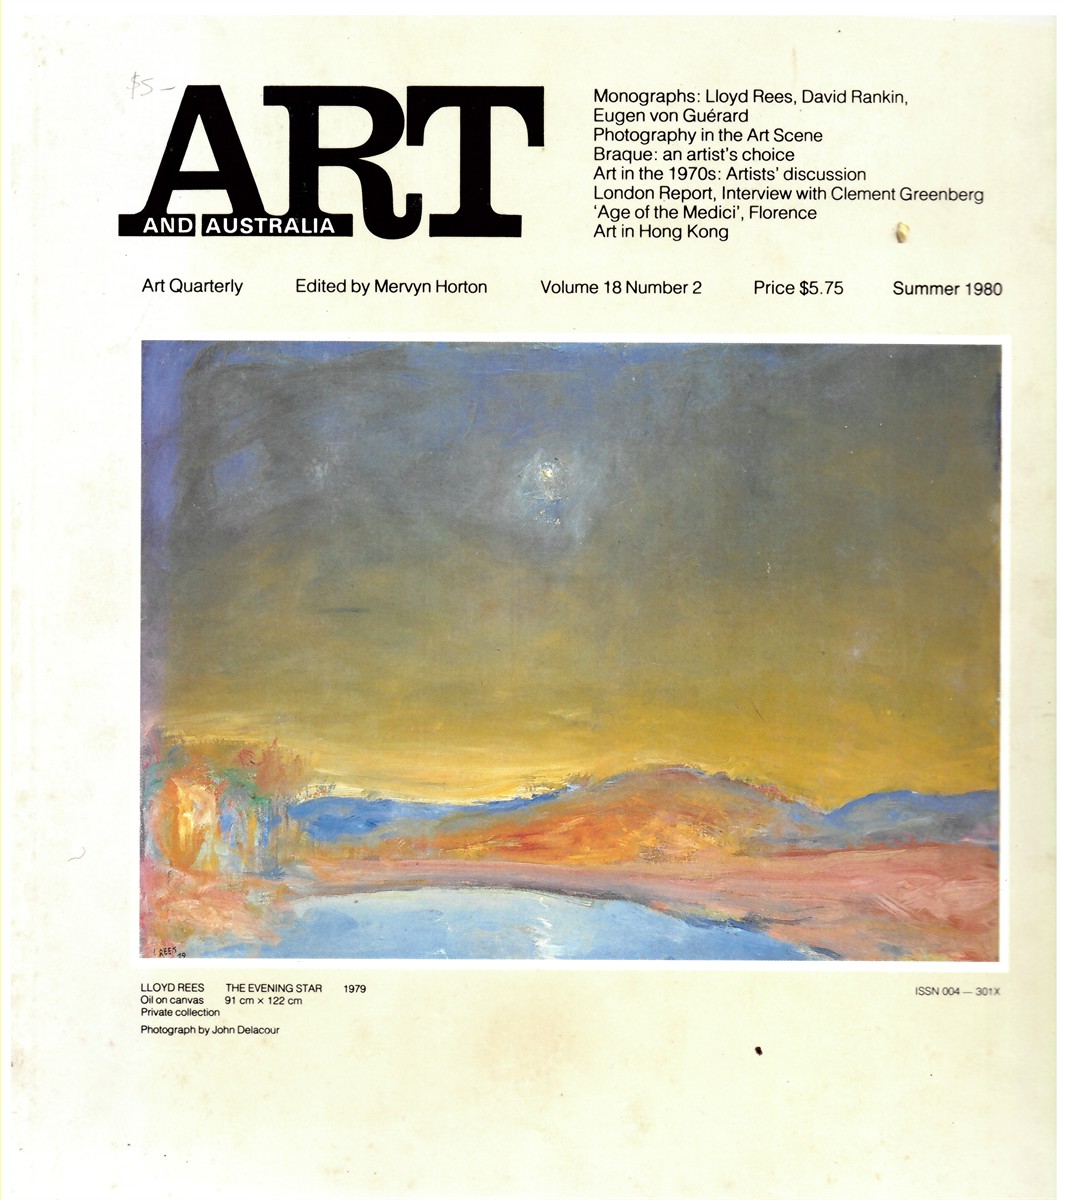 HORTON, MERVYN (EDITOR) - Art and Australia. Arts Quarterly Volume 18 Number 2 Summer 1980